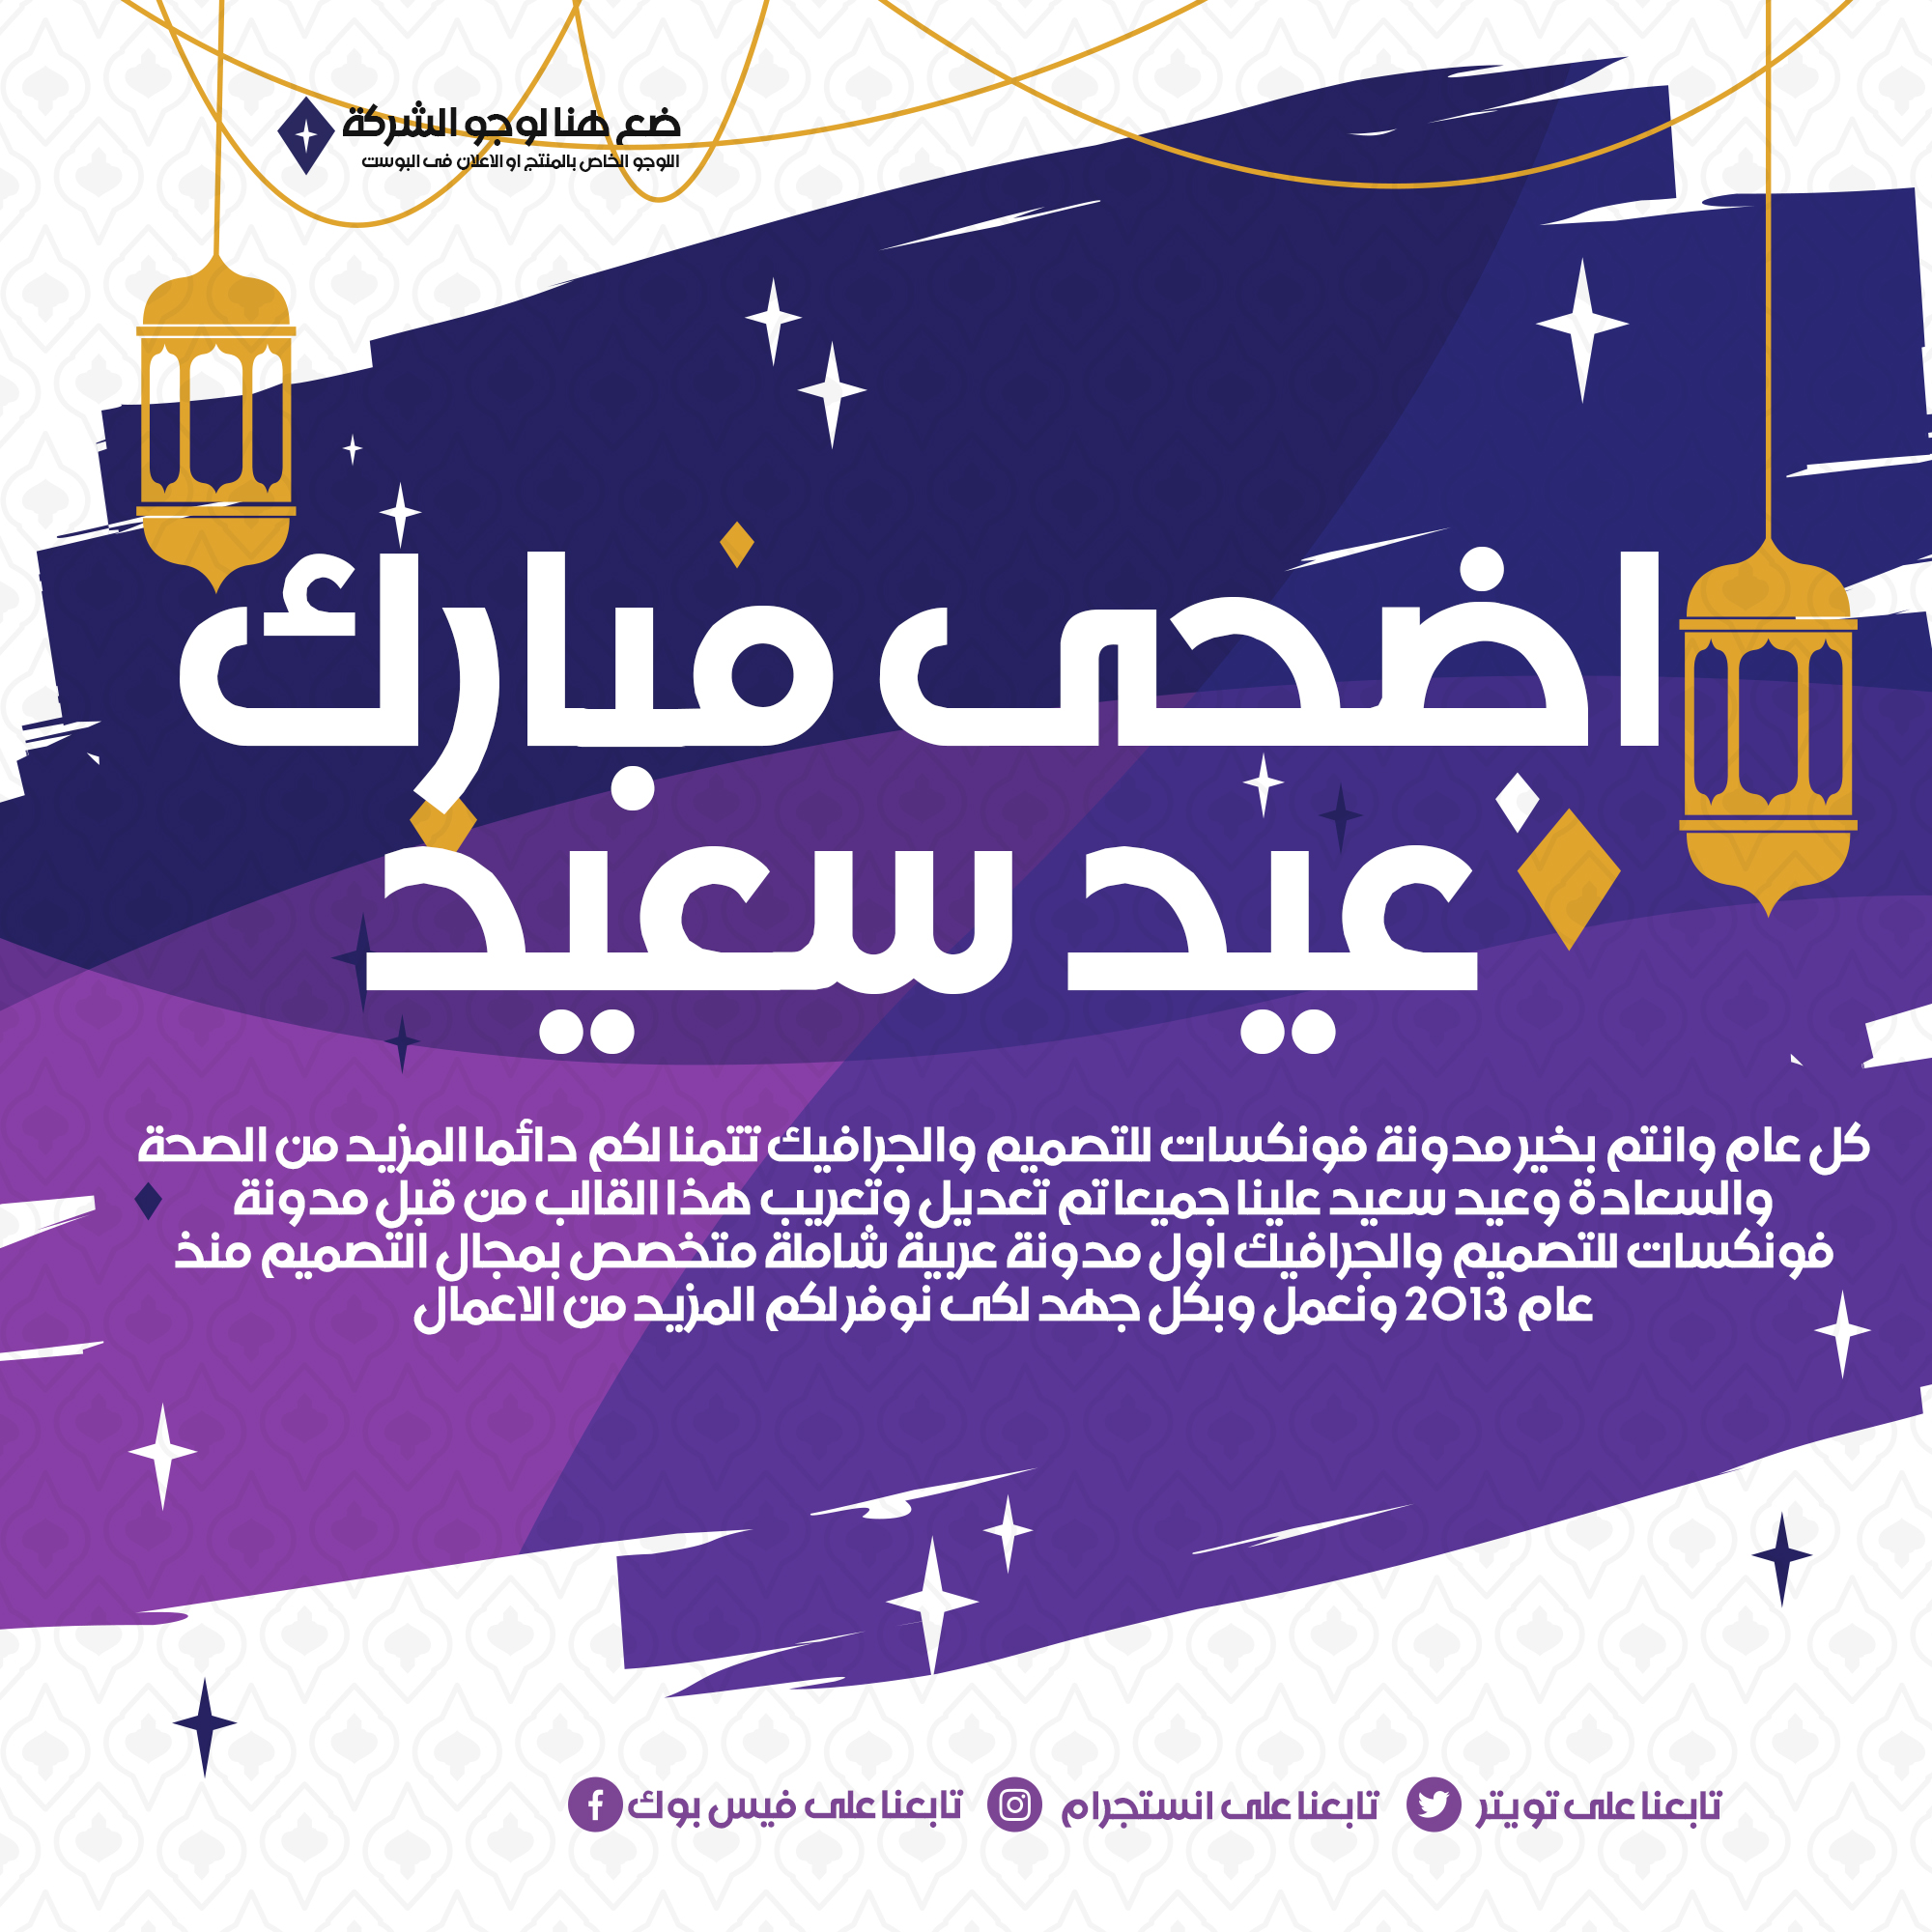 Download social media designs for Eid Al-Adha and Eid congratulations